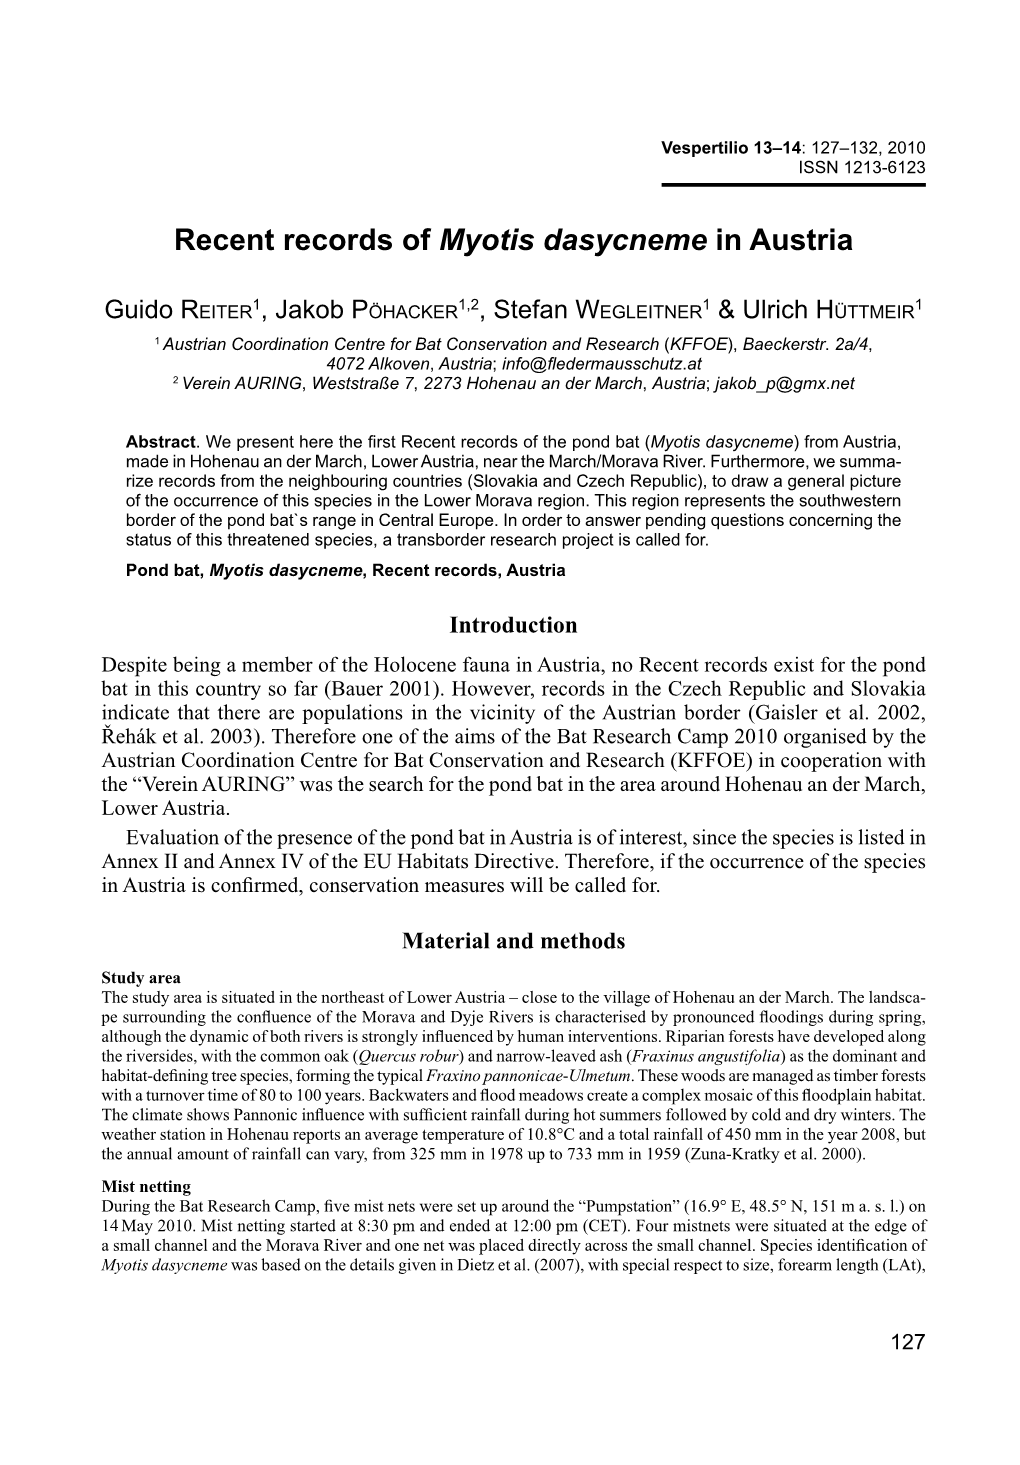 Recent Records of Myotis Dasycneme in Austria